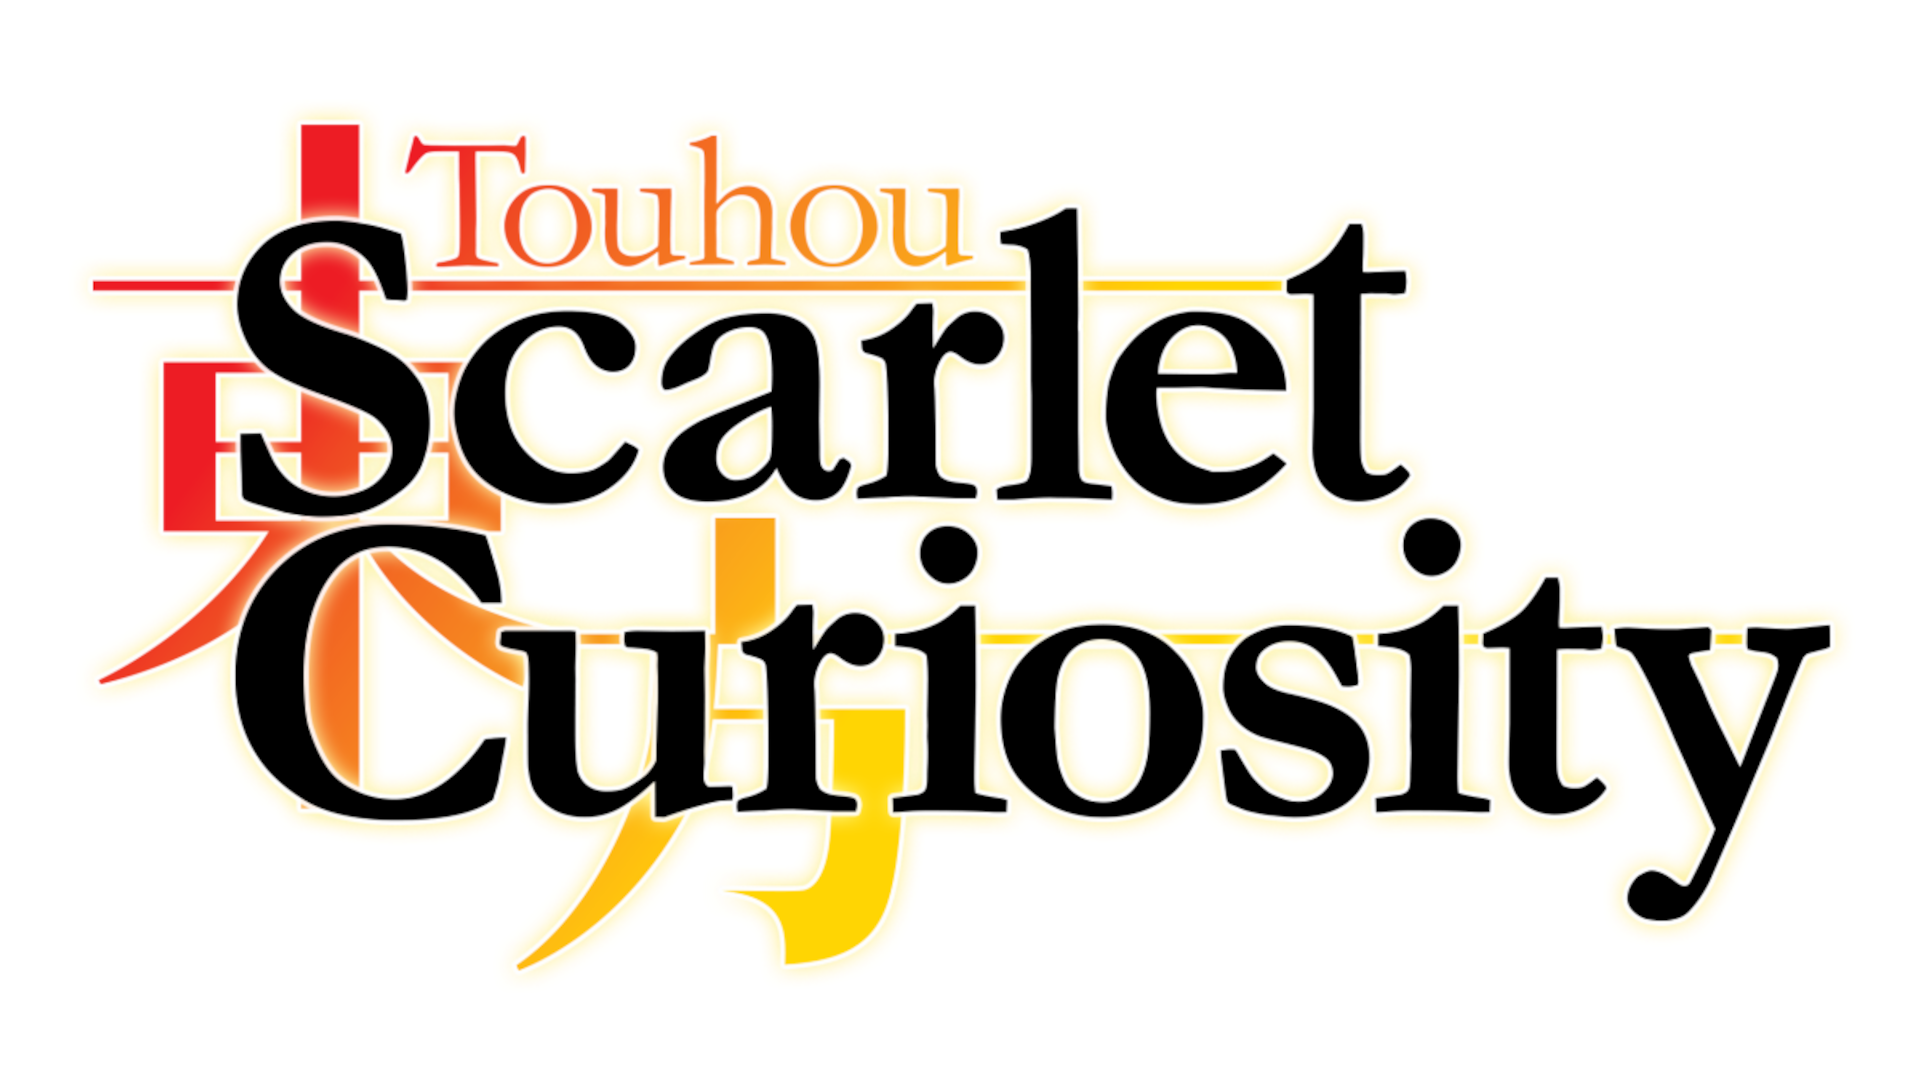 Touhou: Scarlet Curiosity Logo